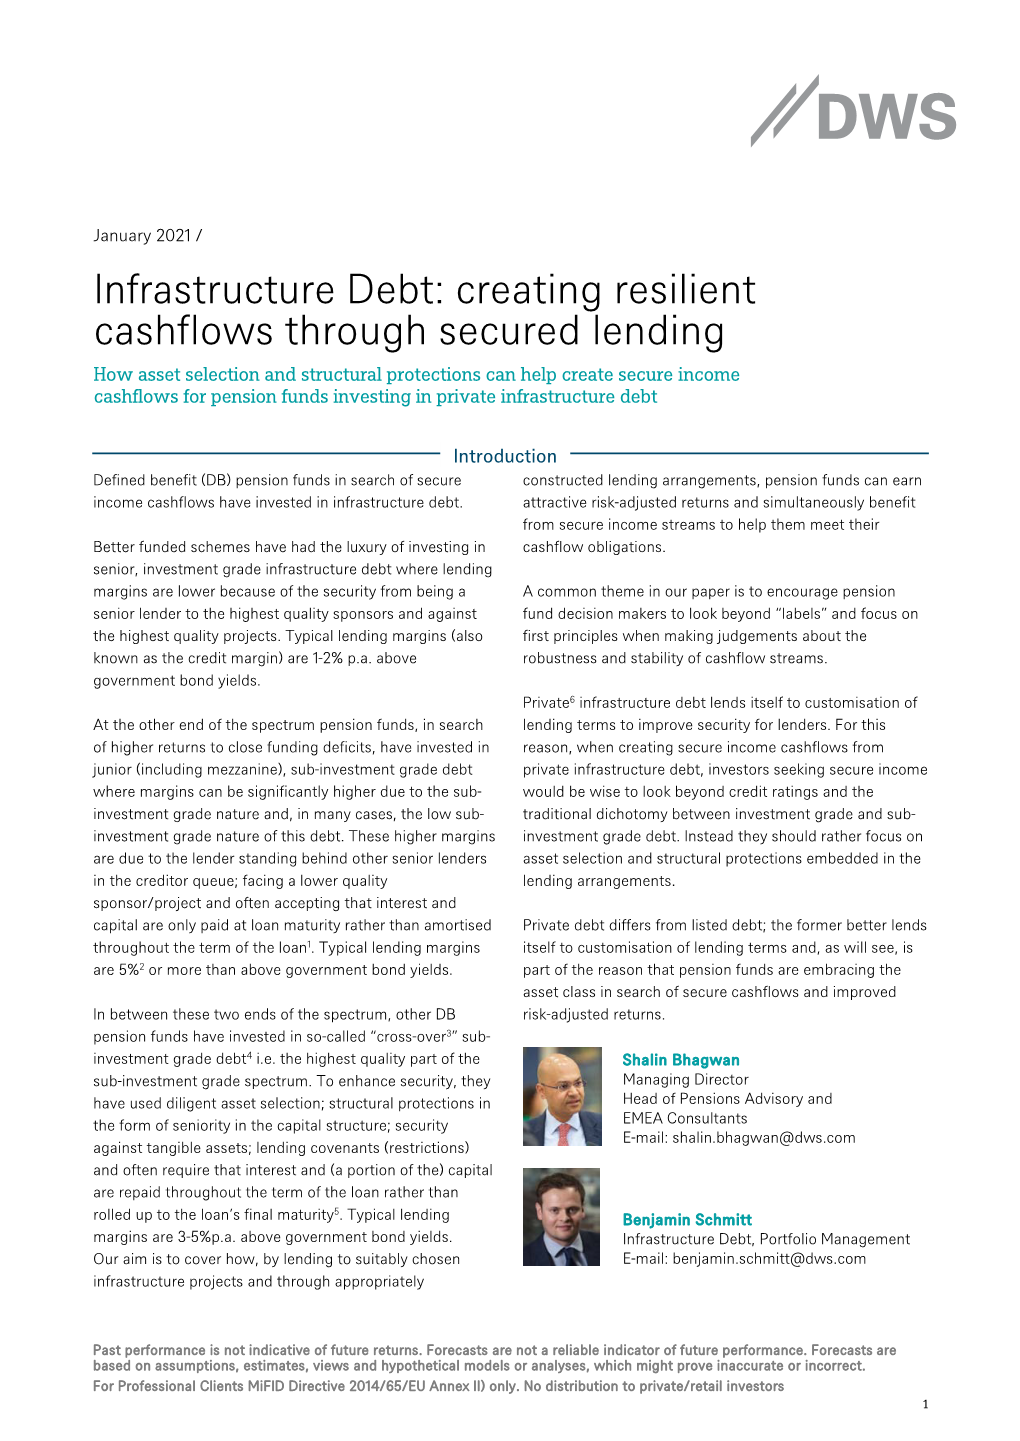 Infrastructure Debt: Creating Resilient Cashflows Through Secured Lending